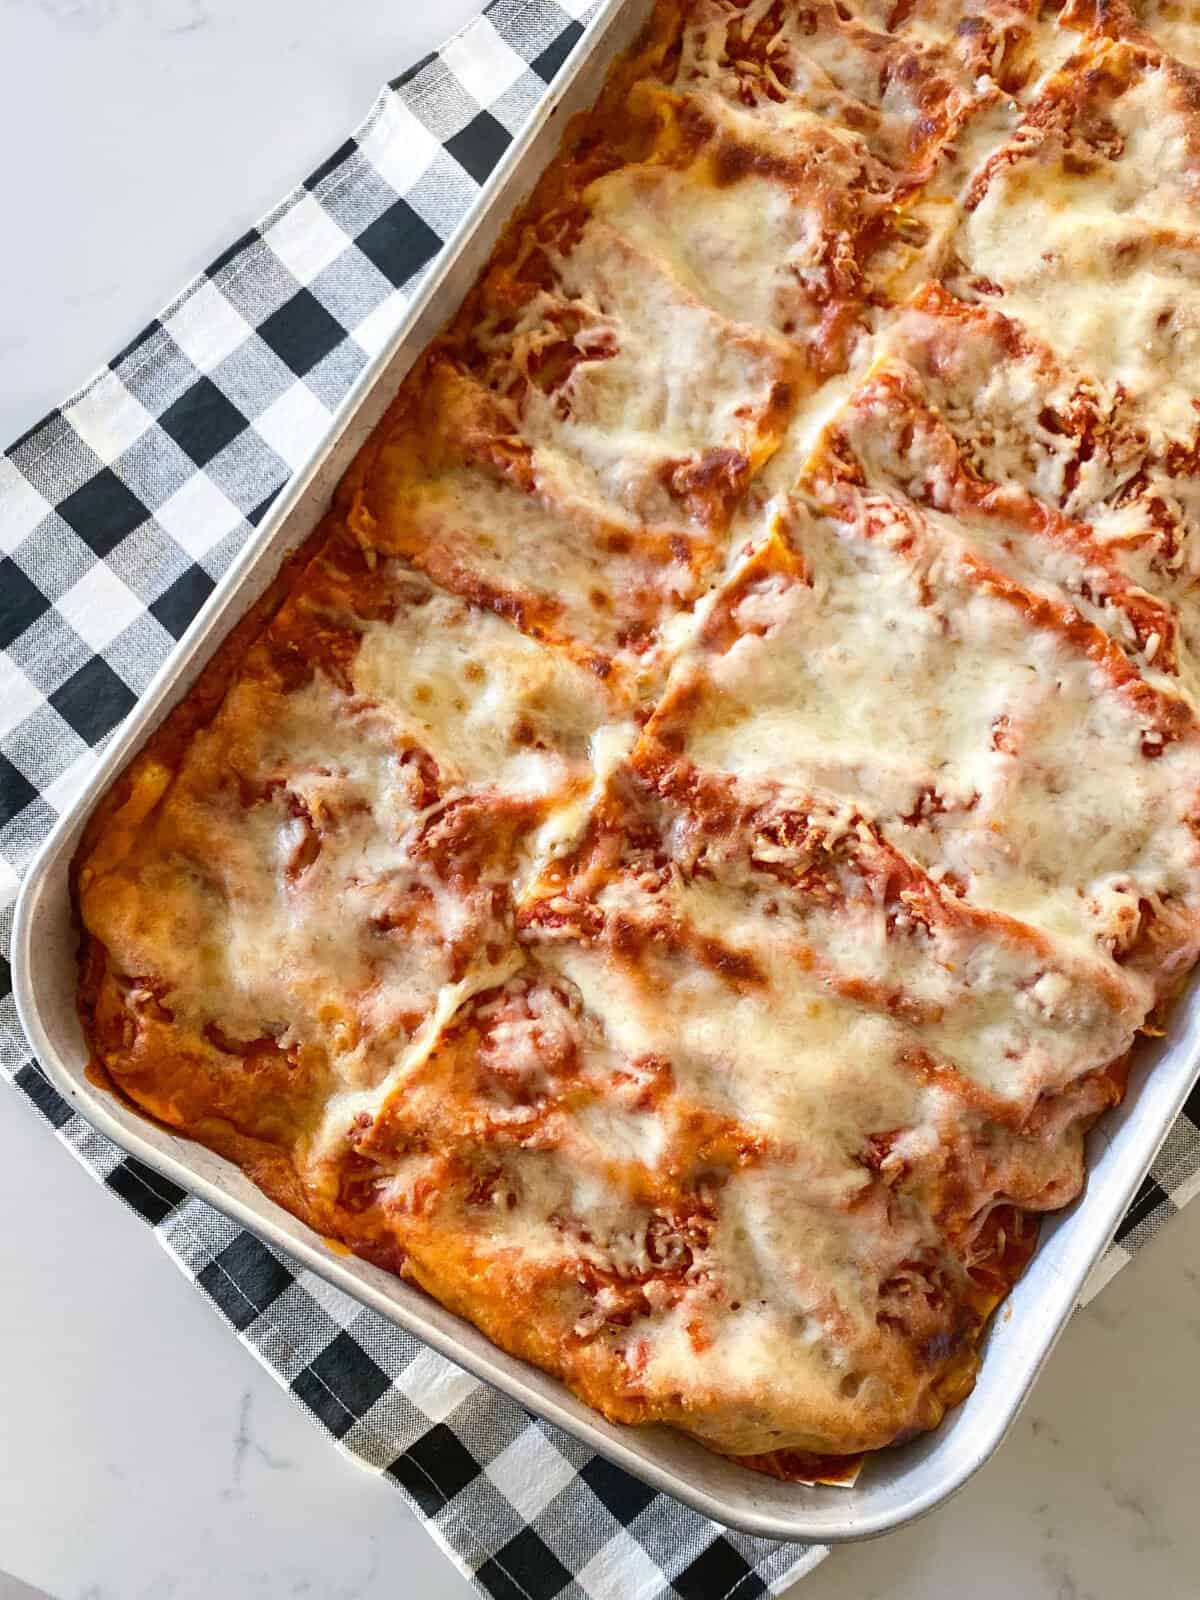 Homemade Easy Lasagna Recipe -Best Lasagna Recipe